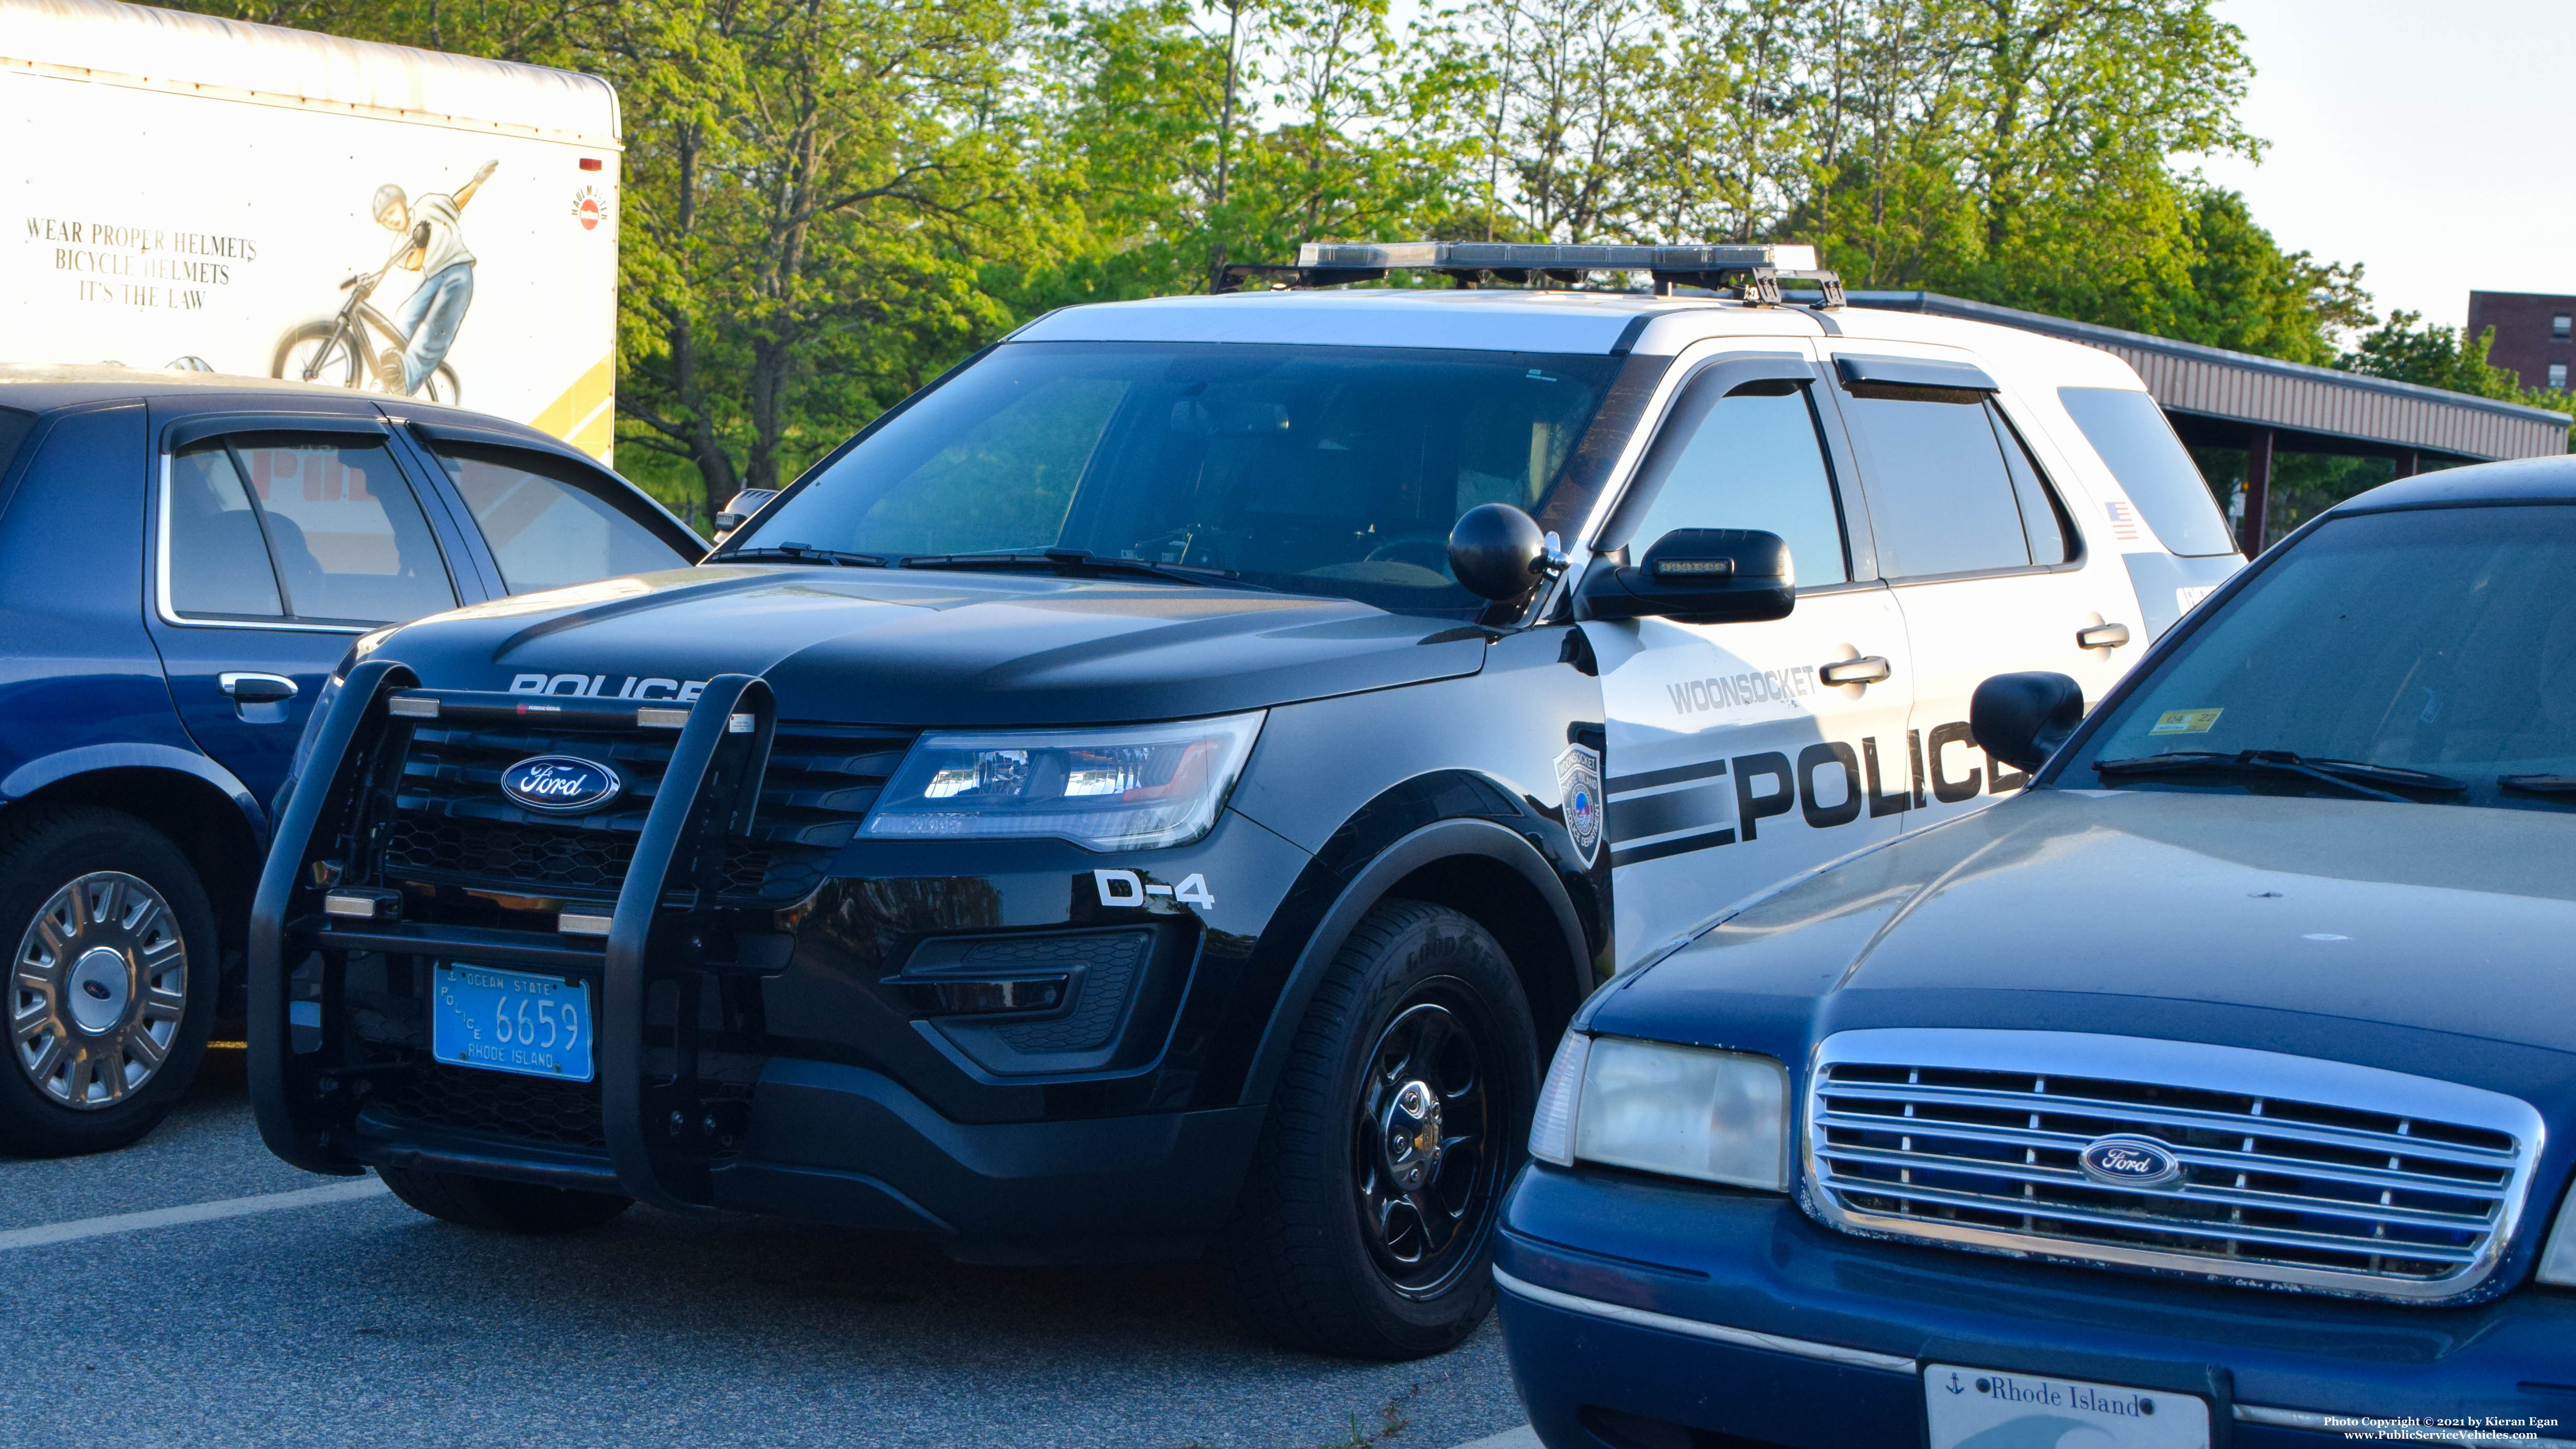 A photo  of Woonsocket Police
            D-4, a 2016-2019 Ford Police Interceptor Utility             taken by Kieran Egan